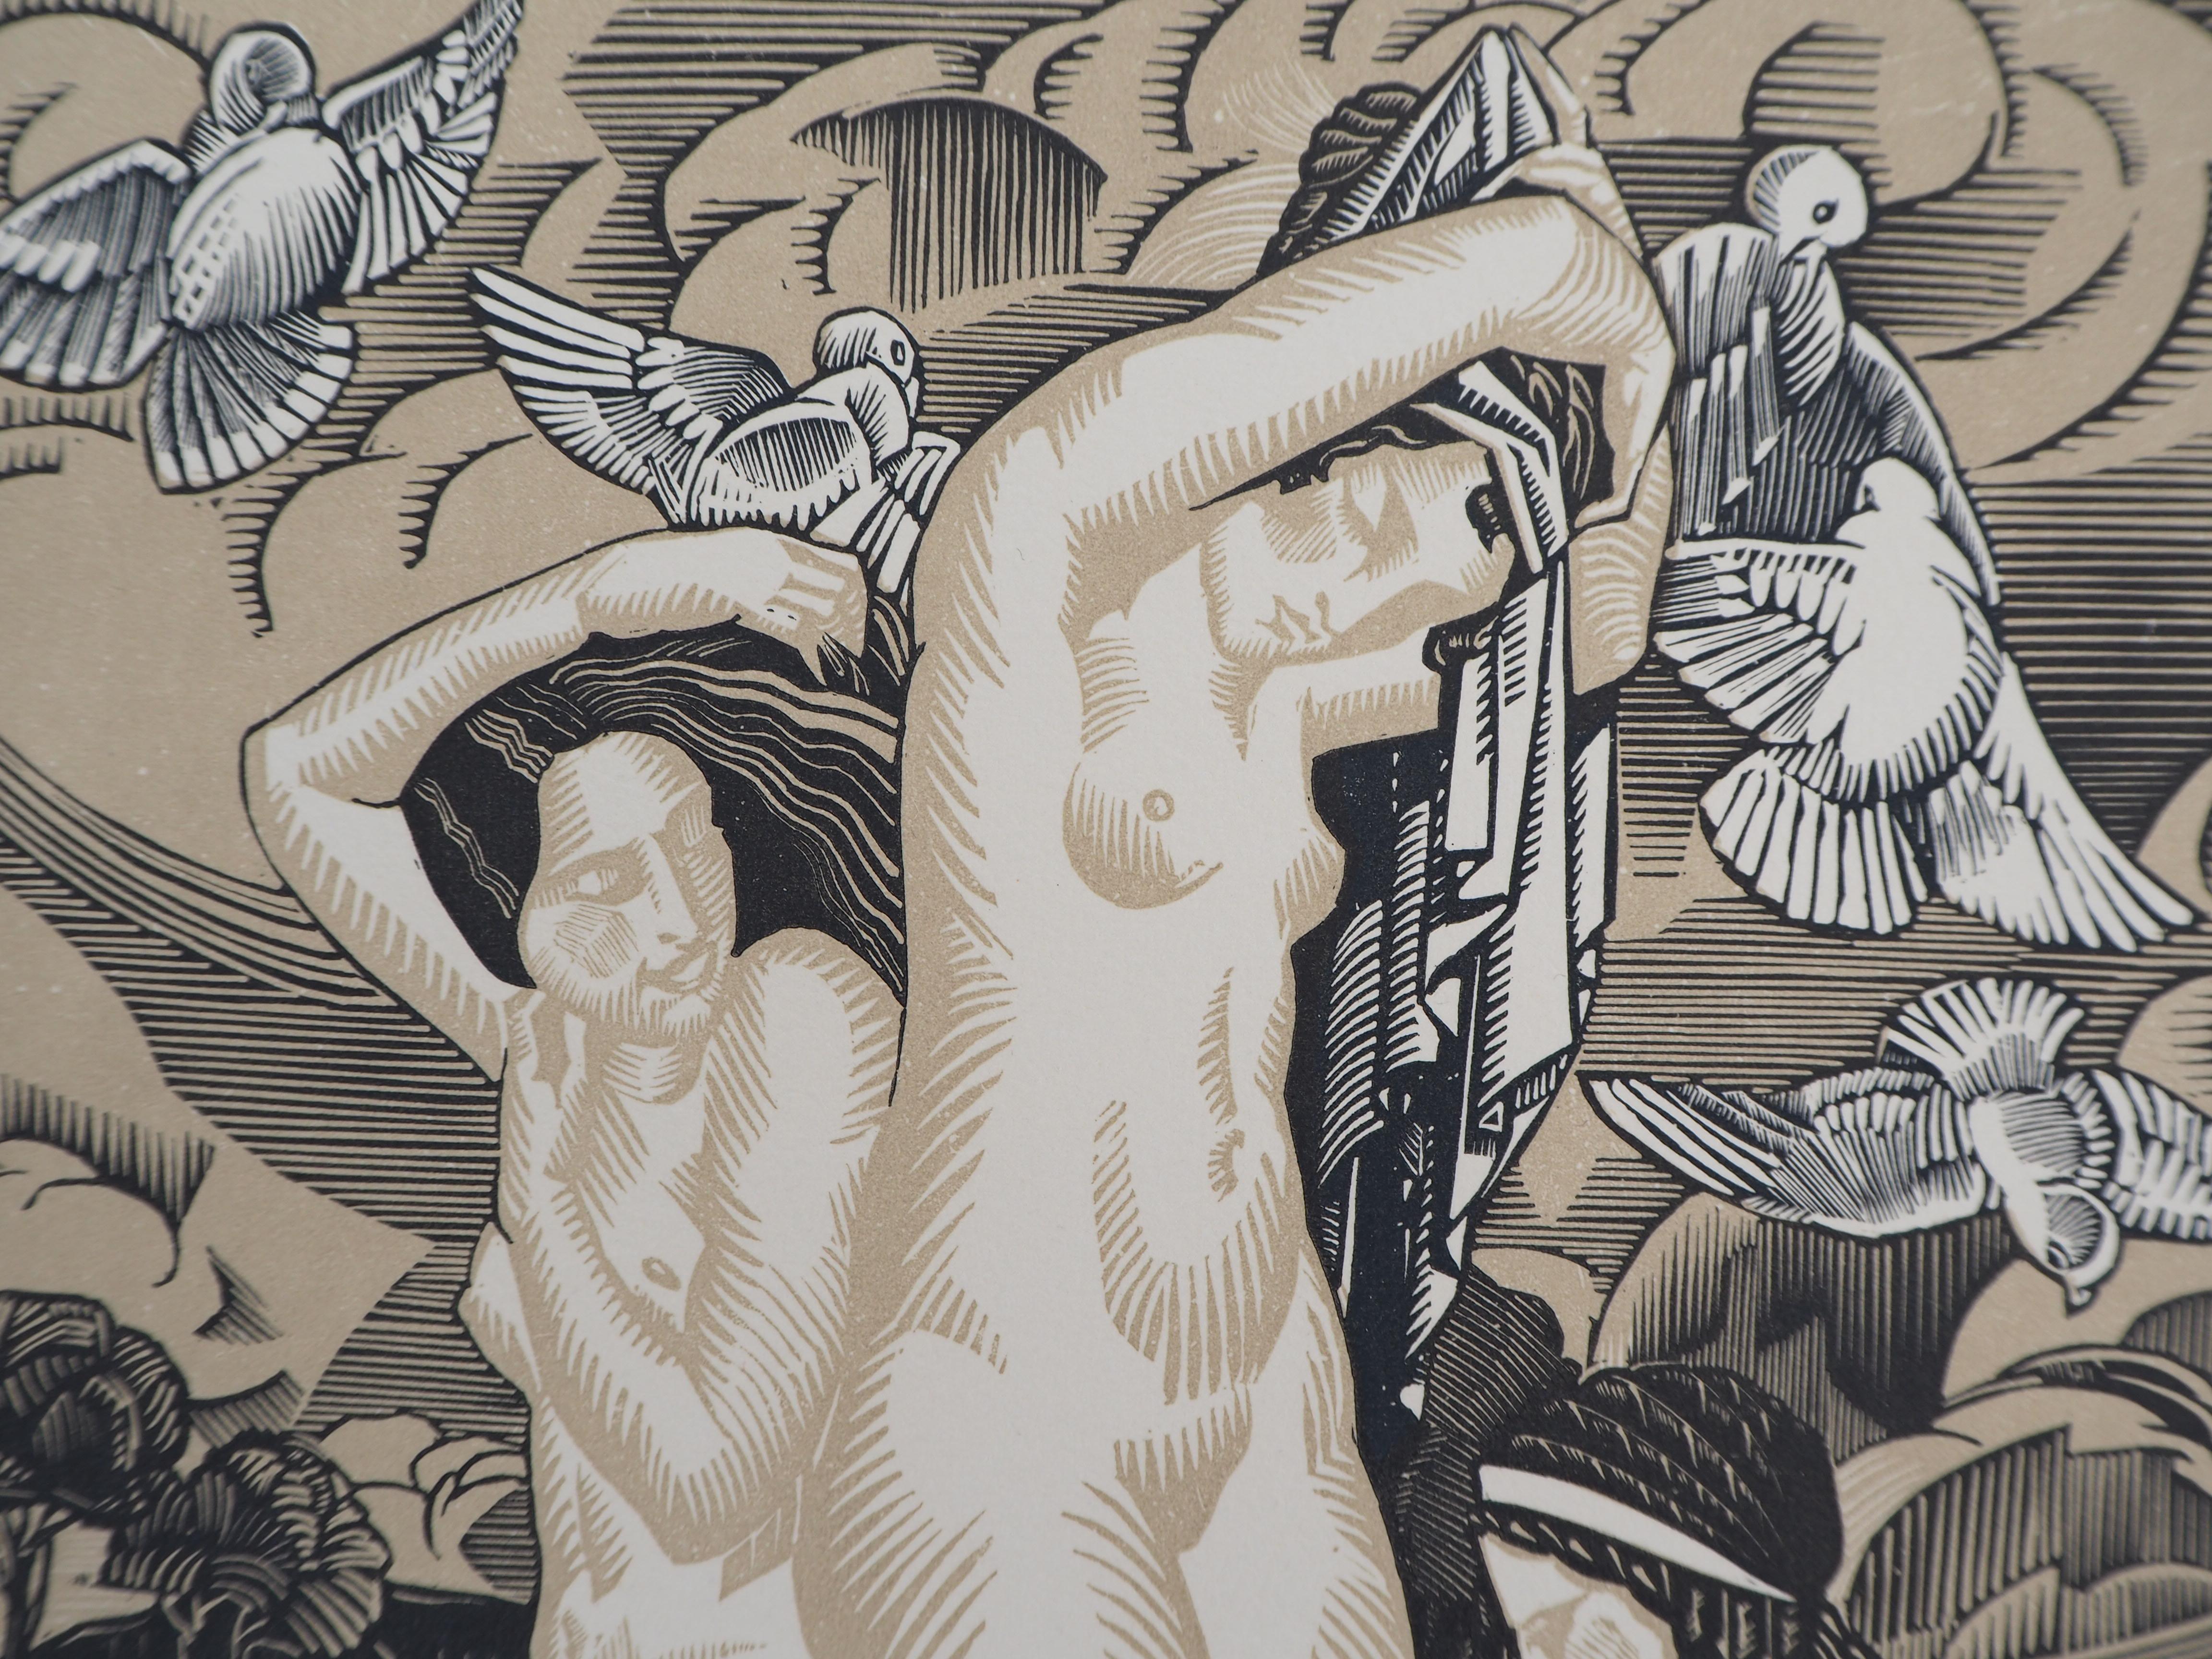 Henri Clement-Serveau
Art Deco : Women with Doves, 1925

Original woodcut
Handsigned in pencil
Numbered /160
On vellum 32.5 x 25.5 cm (c. 13 x 10 in)
Bears the blind stamp of the editor 'Imagier de la Gravure sur Bois' (Lugt 1140a)

Excellent